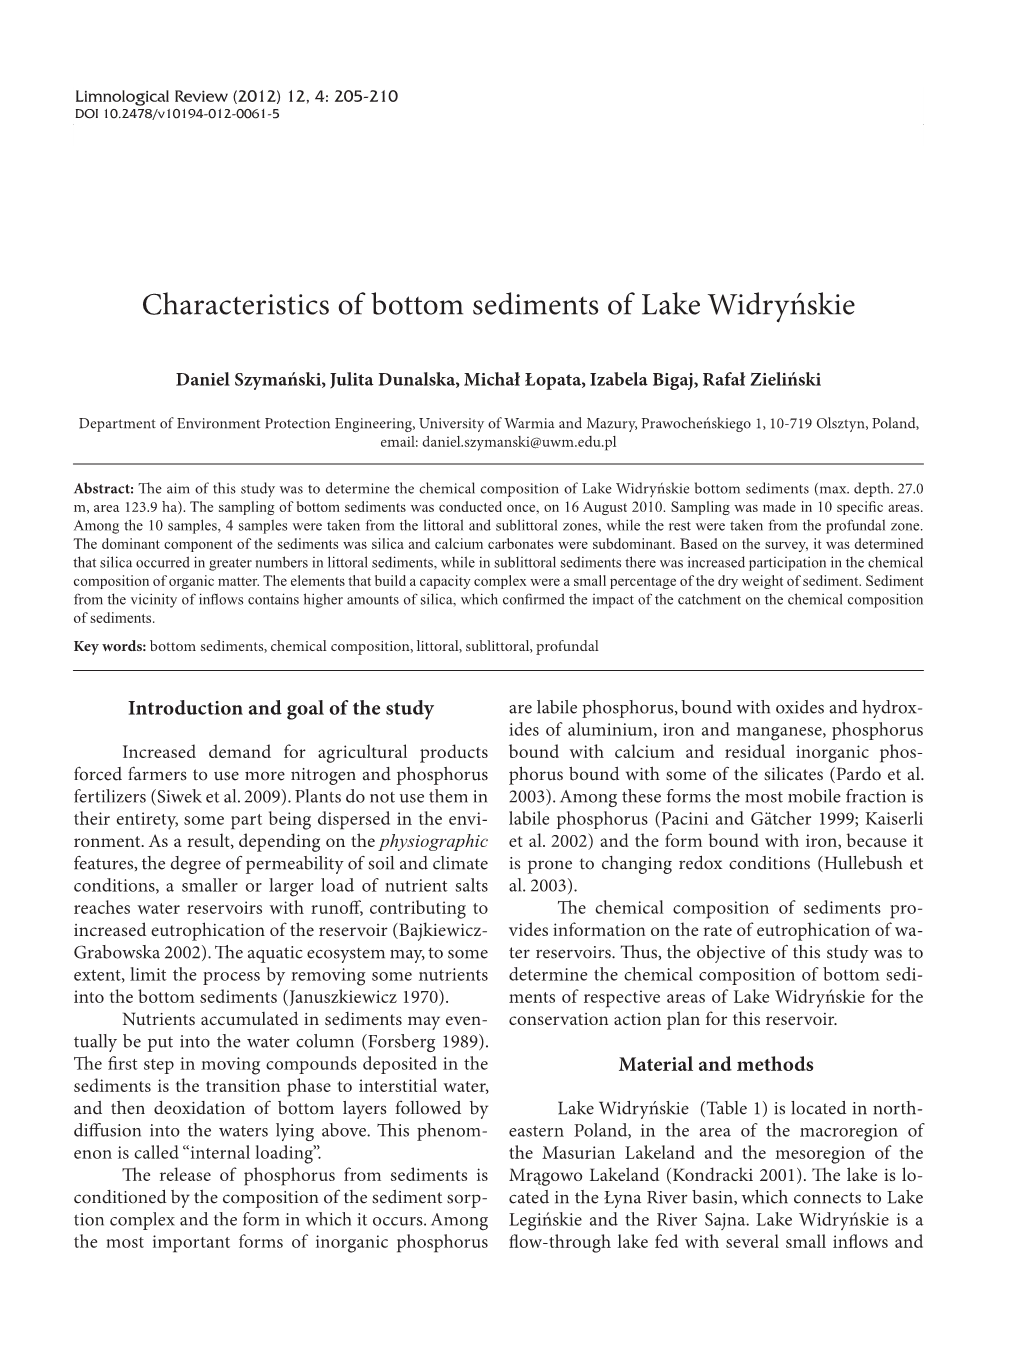 Characteristics of Bottom Sediments of Lake Widryńskie 205